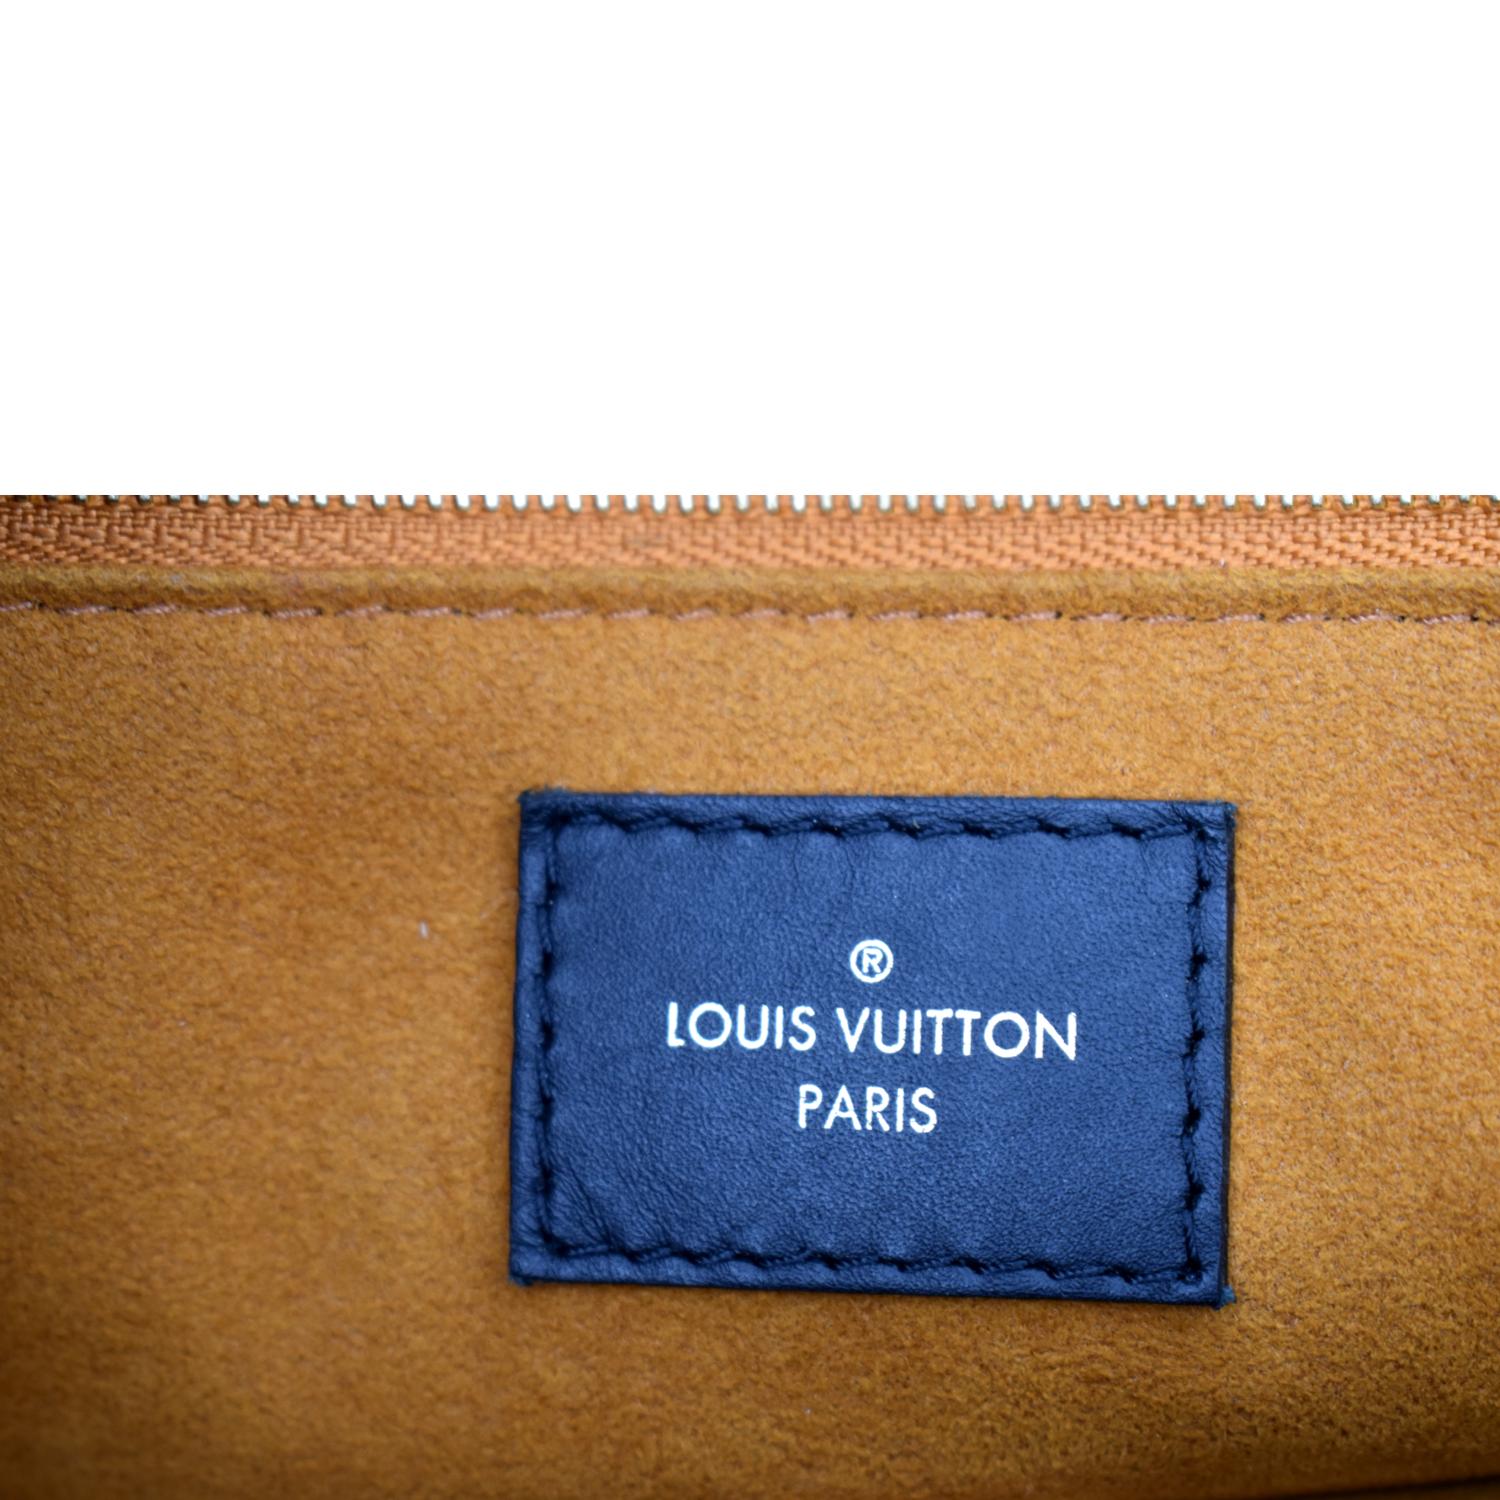 LOUIS VUITTON Onthego GM Monogram Empreinte Leather Tote Bag Black - N